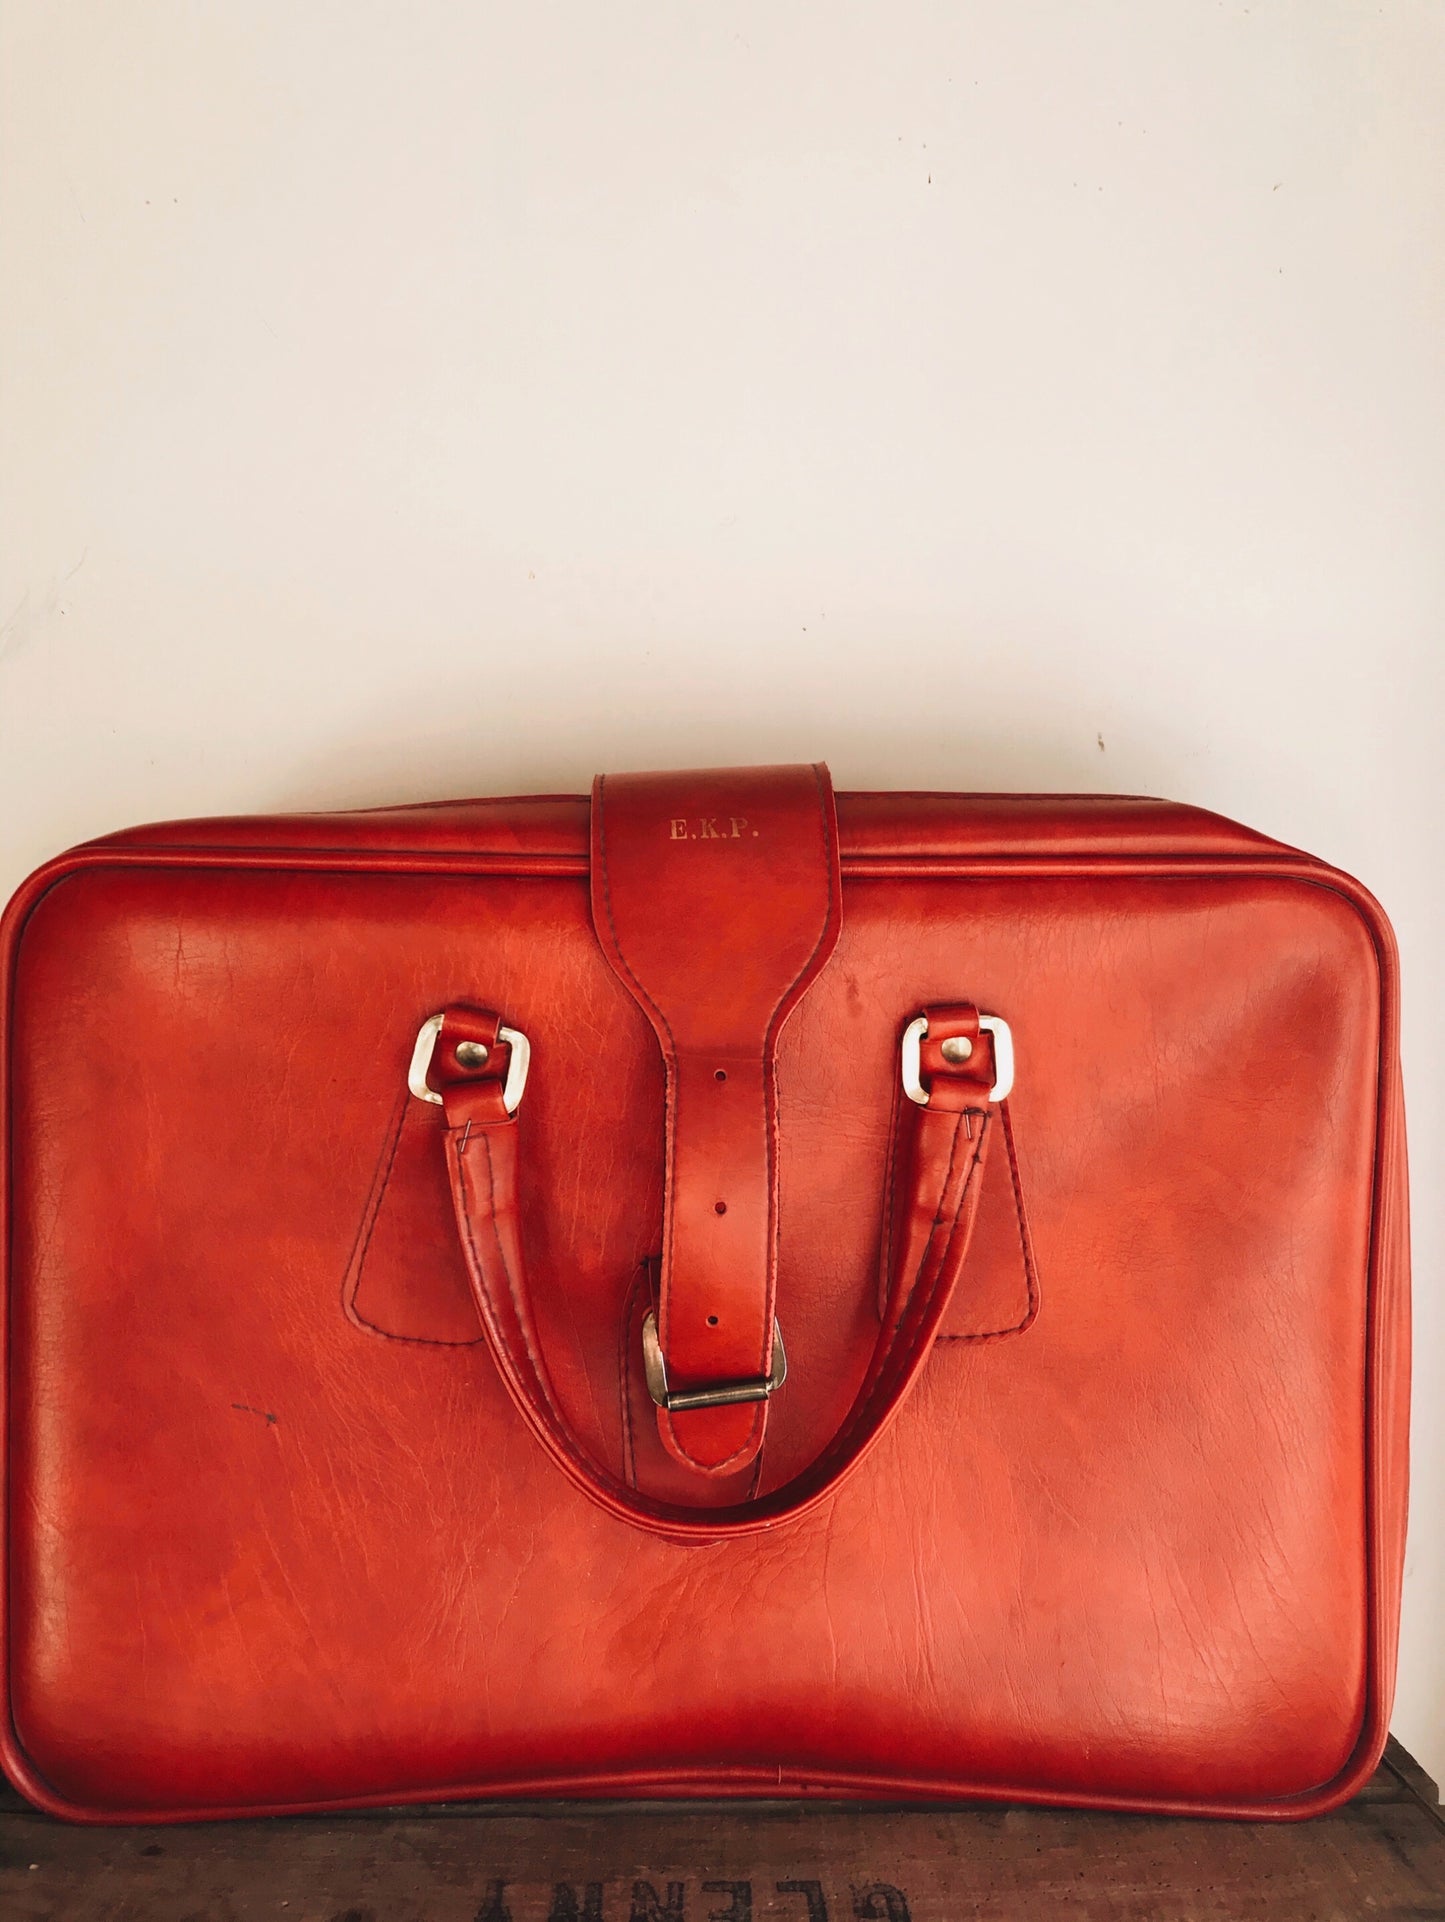 Vintage Red Suitcase ~ E.K.P (personalisation) - Stone & Sage 